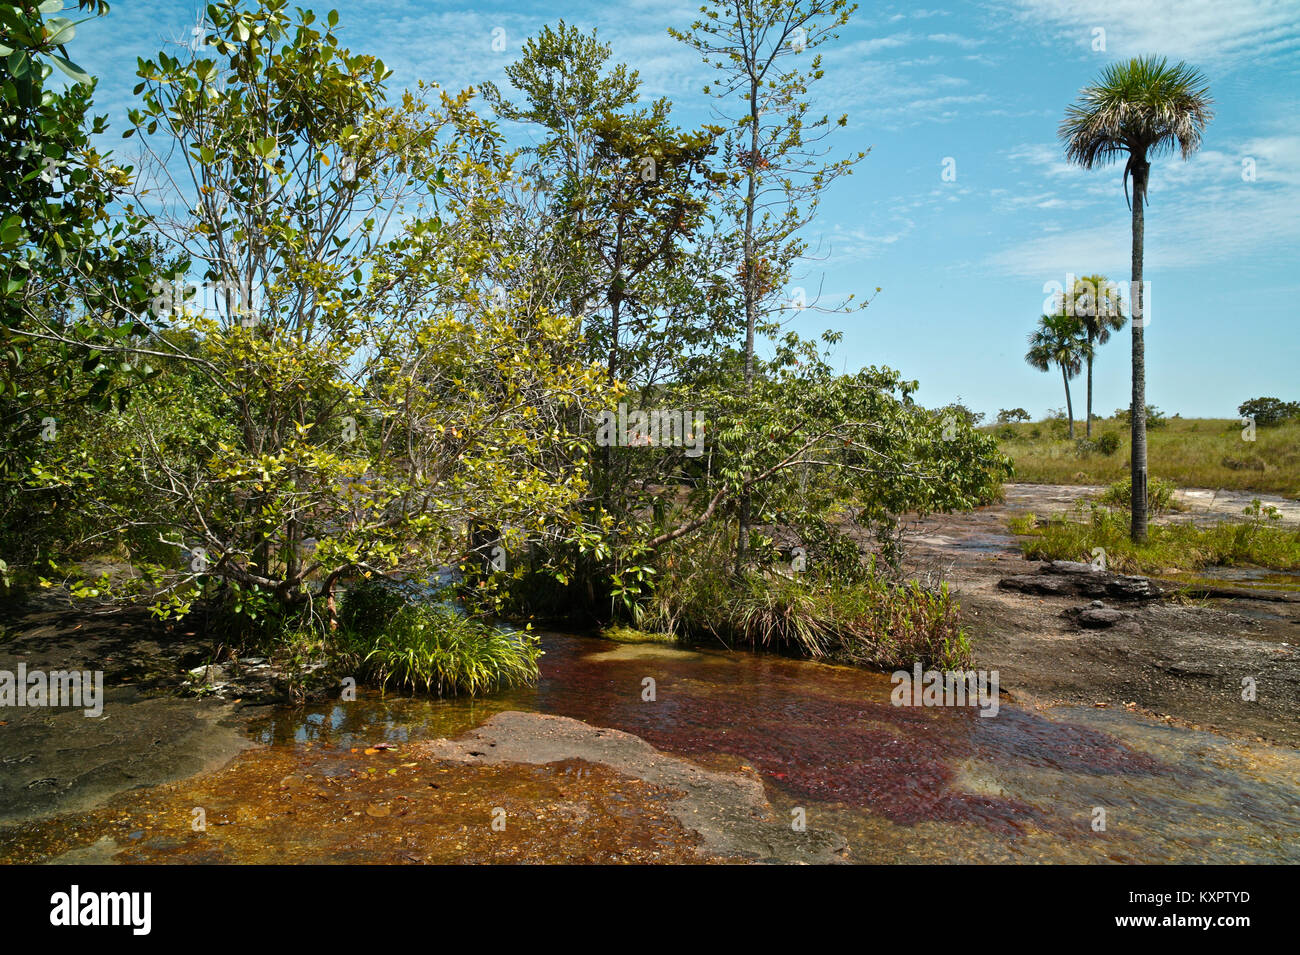 Cano Piedra ecosystem including some Moriche palm tree , Mauritia flexuosa L.F , in the background Stock Photo